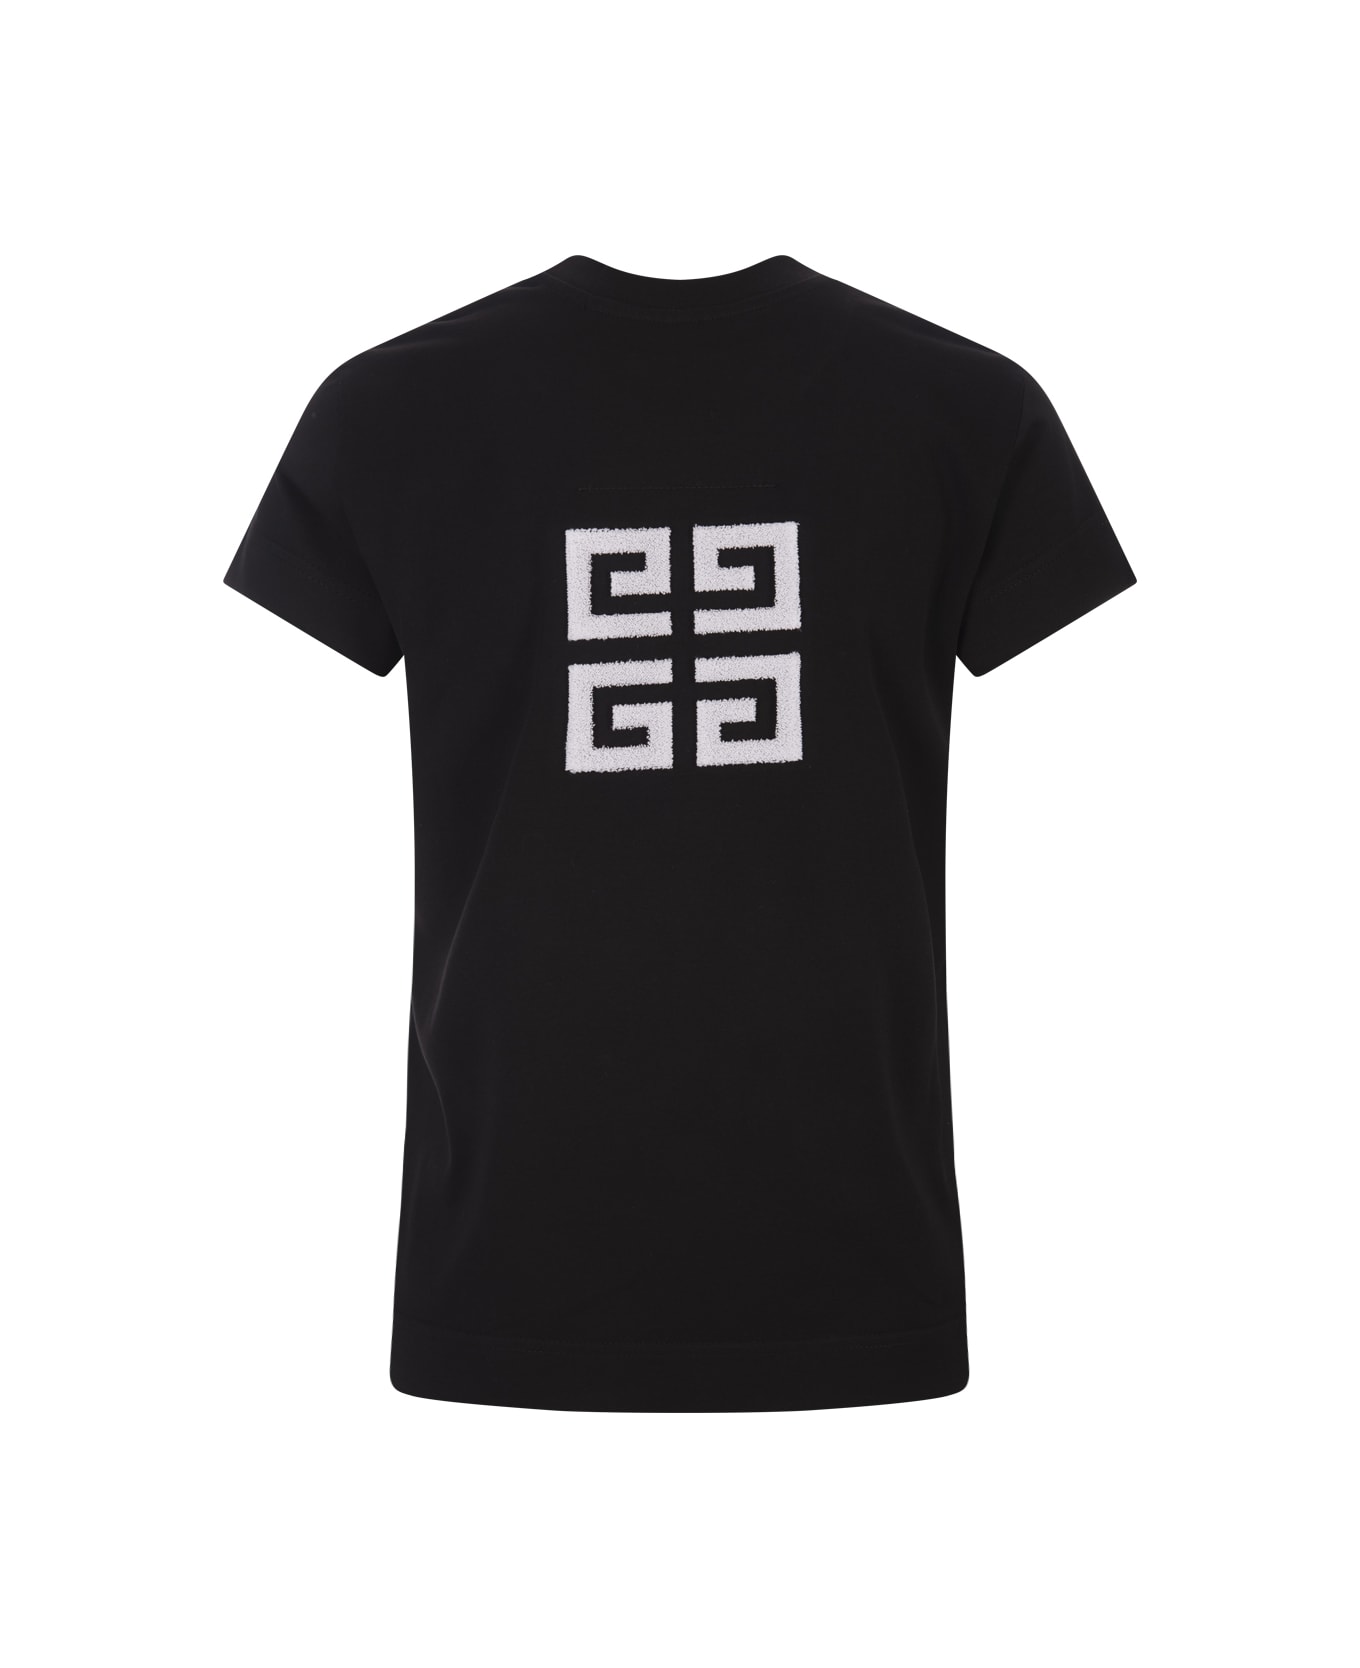 Givenchy 4g Slim T-shirt In Black Cotton - Black